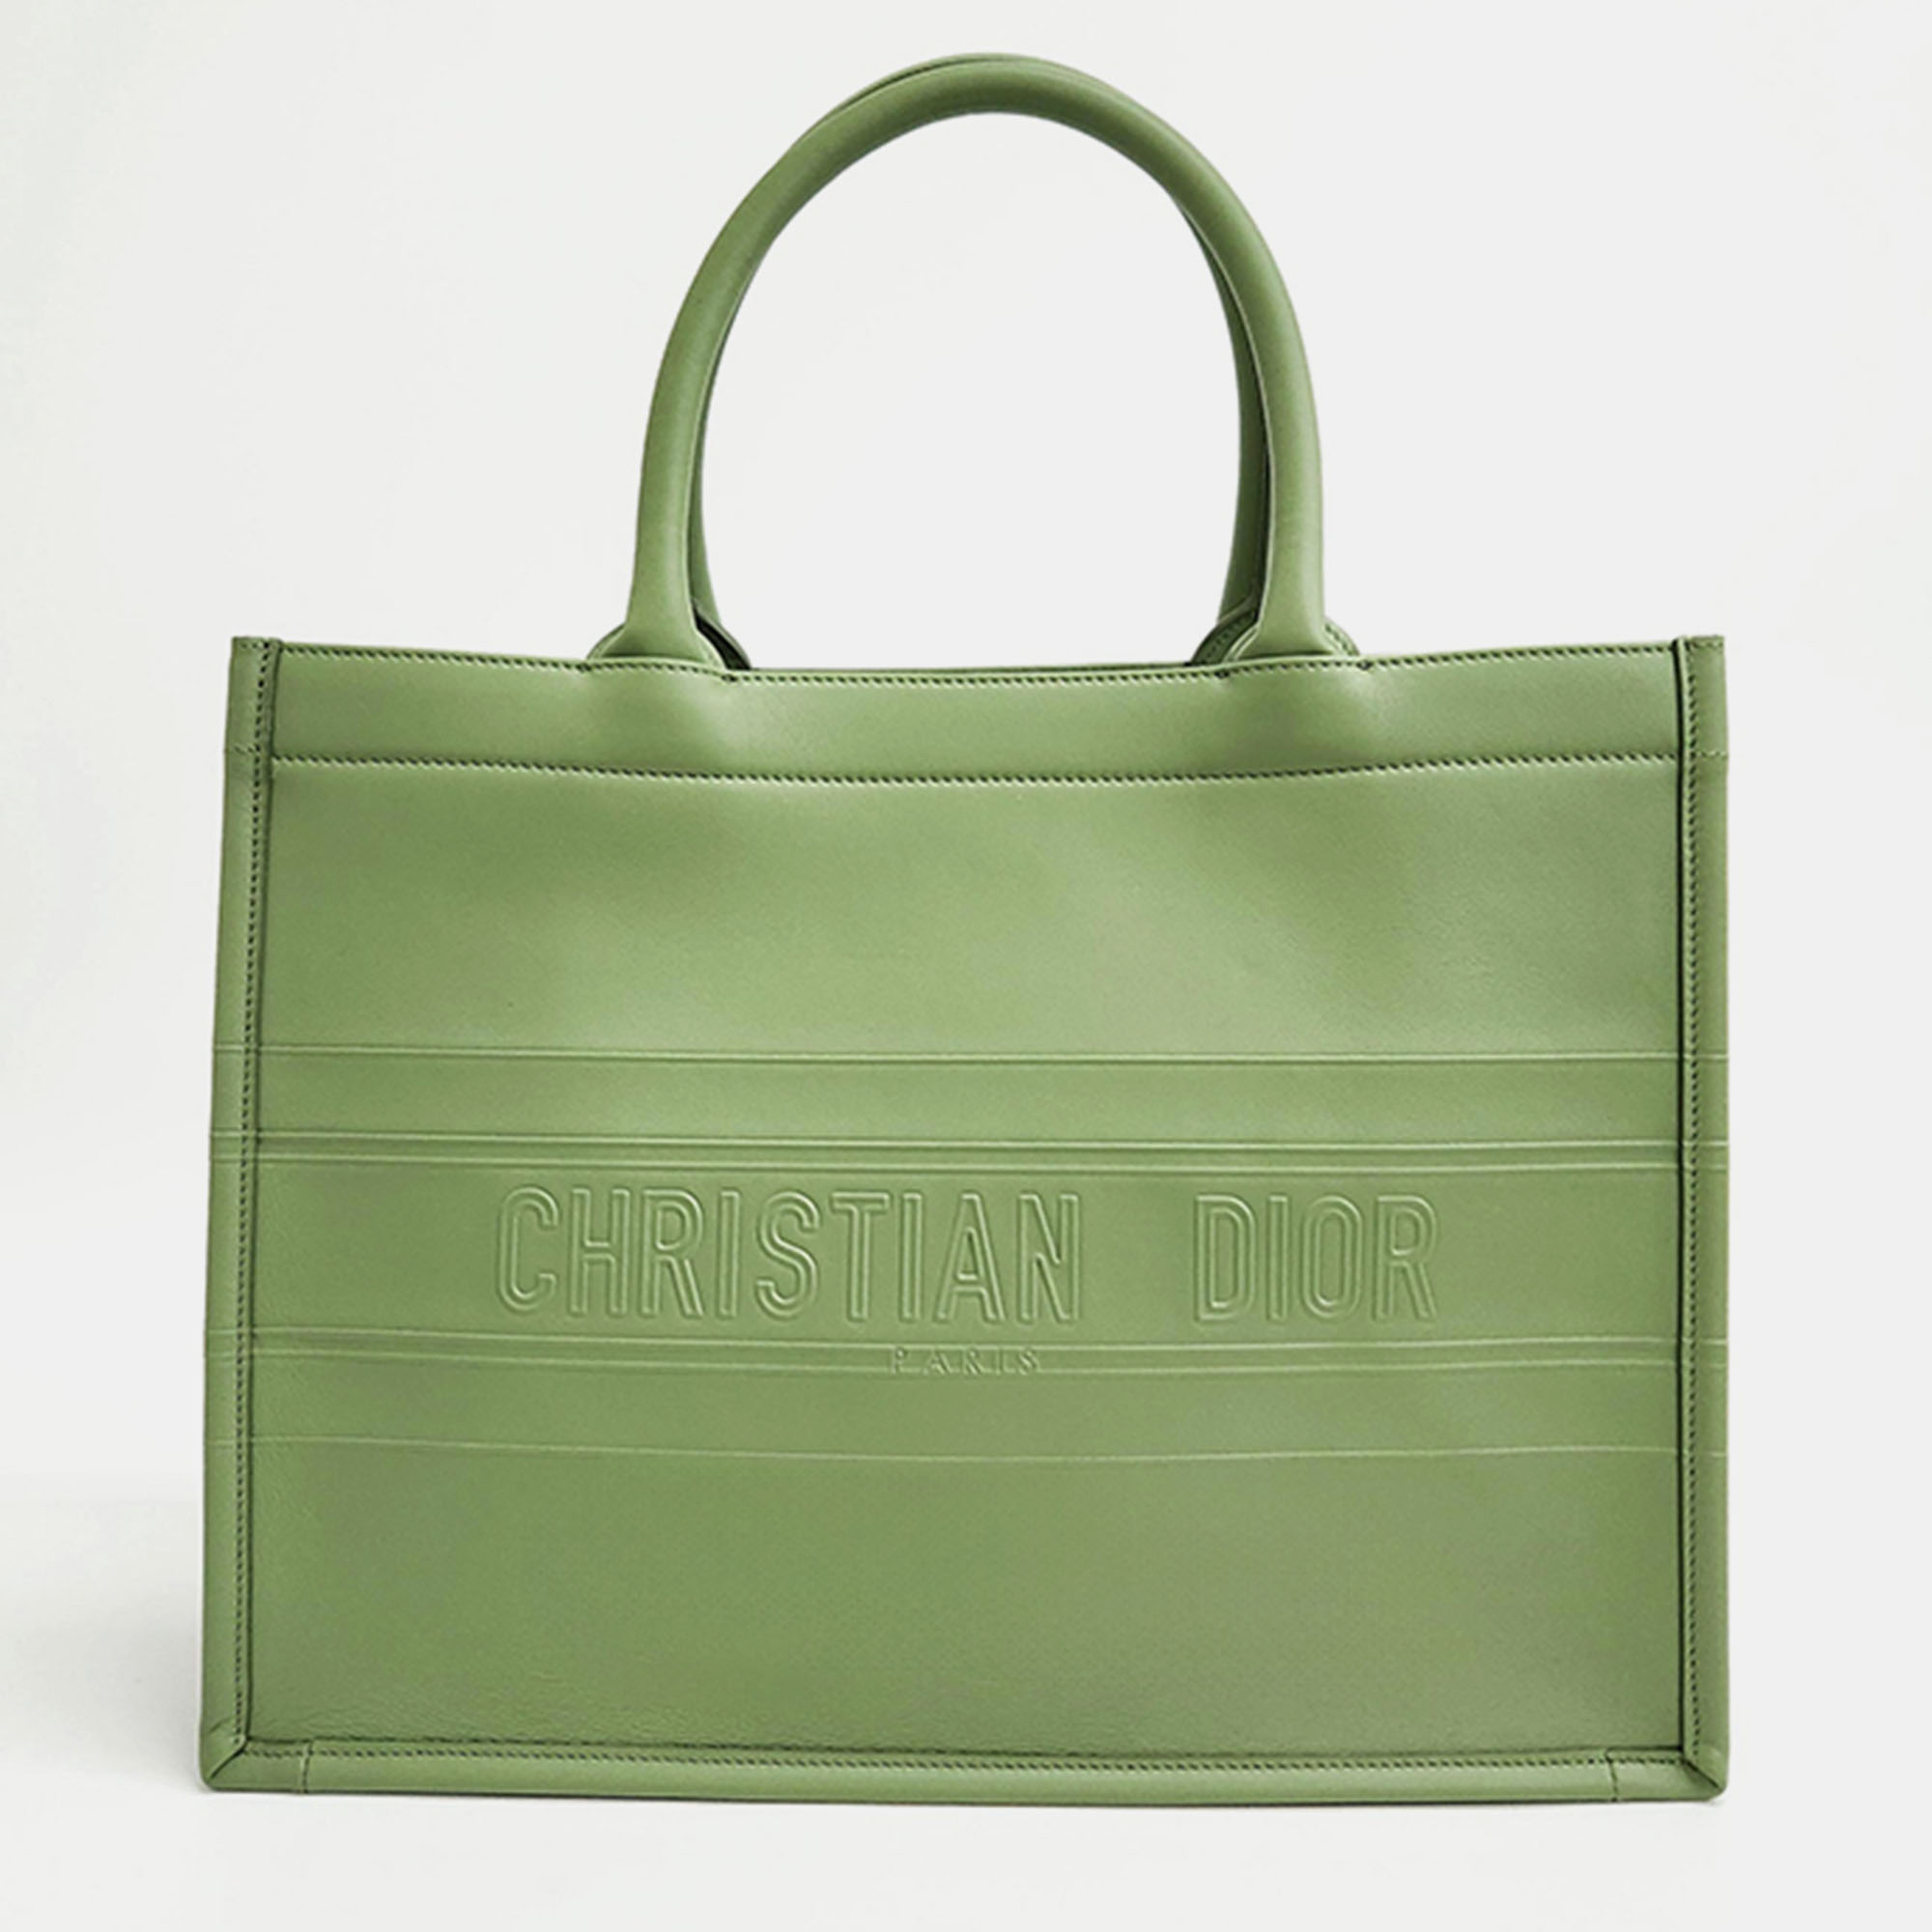 Christian dior green leather medium book tote bag